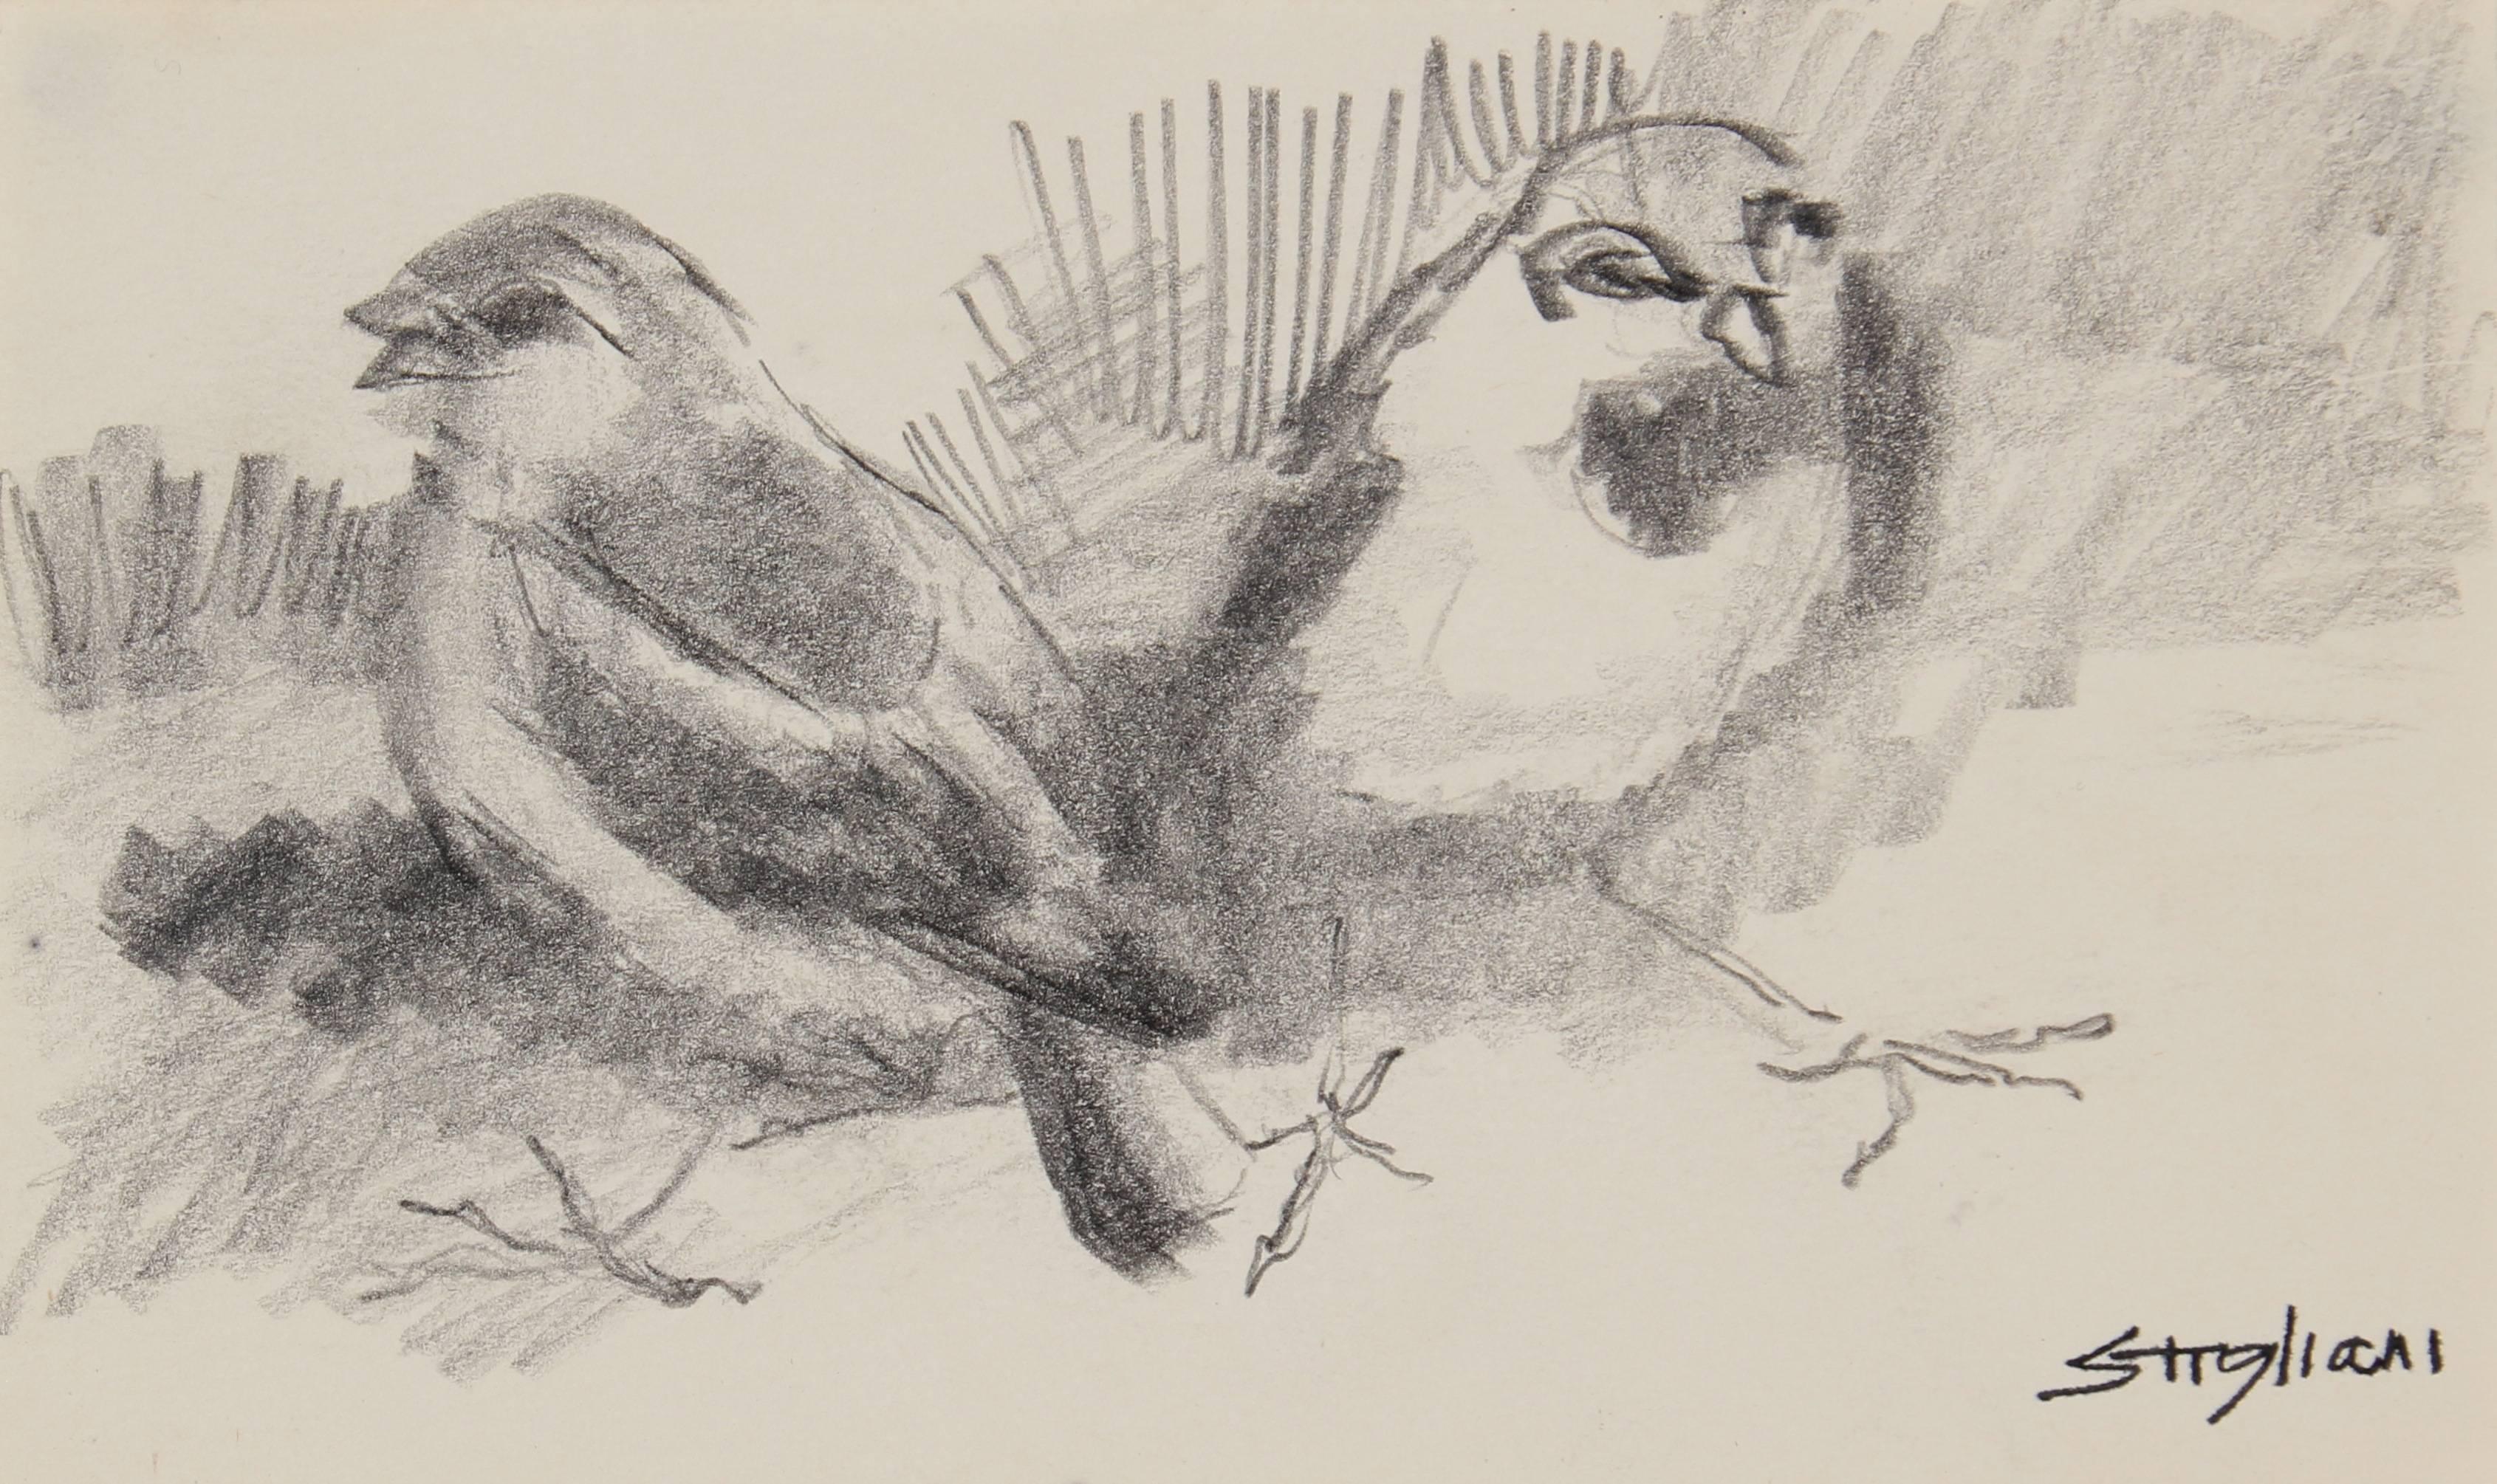 Pasquale Patrick Stigliani Animal Art - Small Birds in Graphite, New York City Drawing